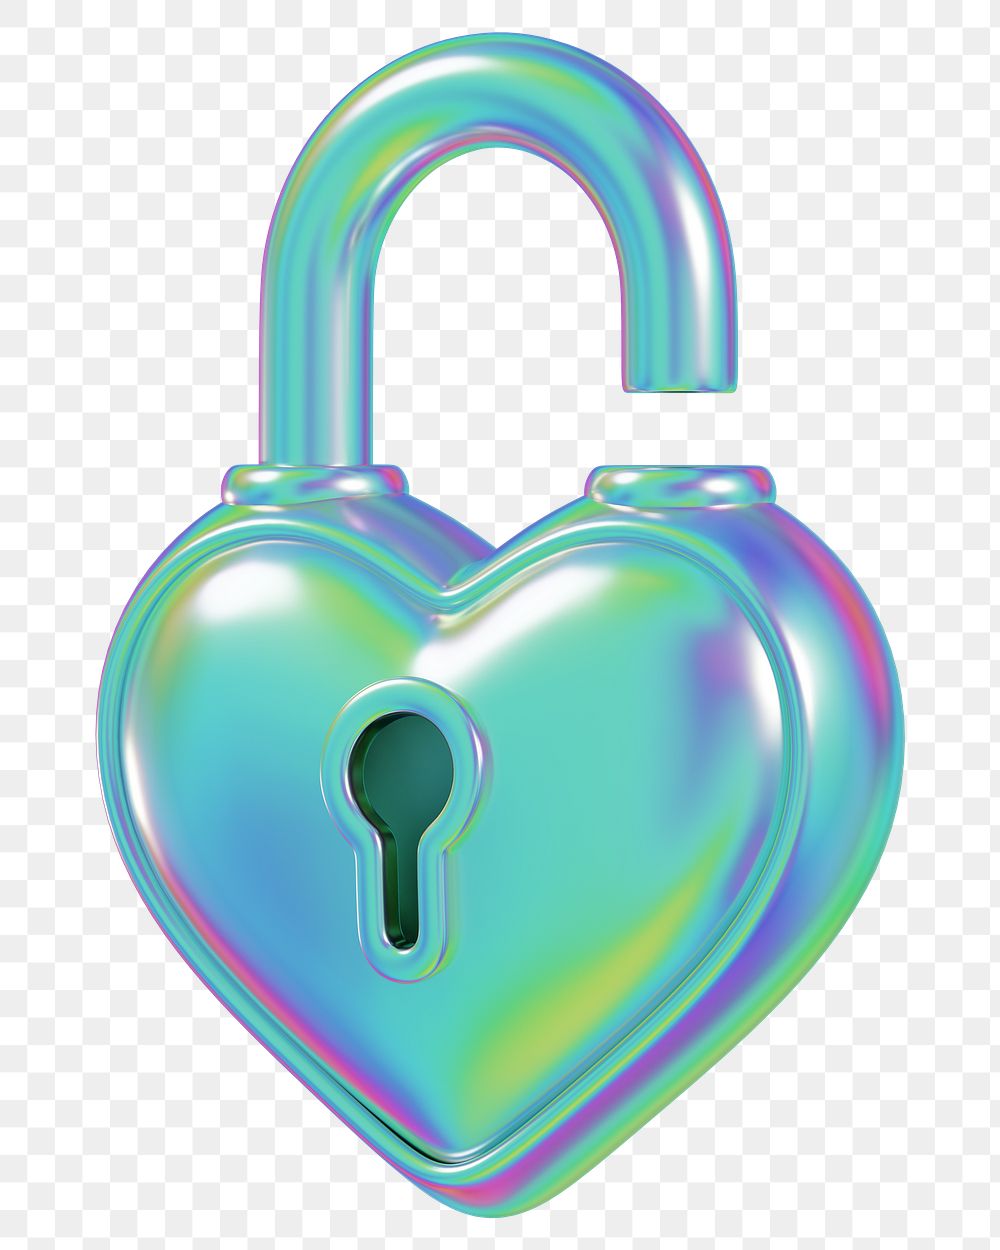 Holographic heart padlock png 3D element, transparent background